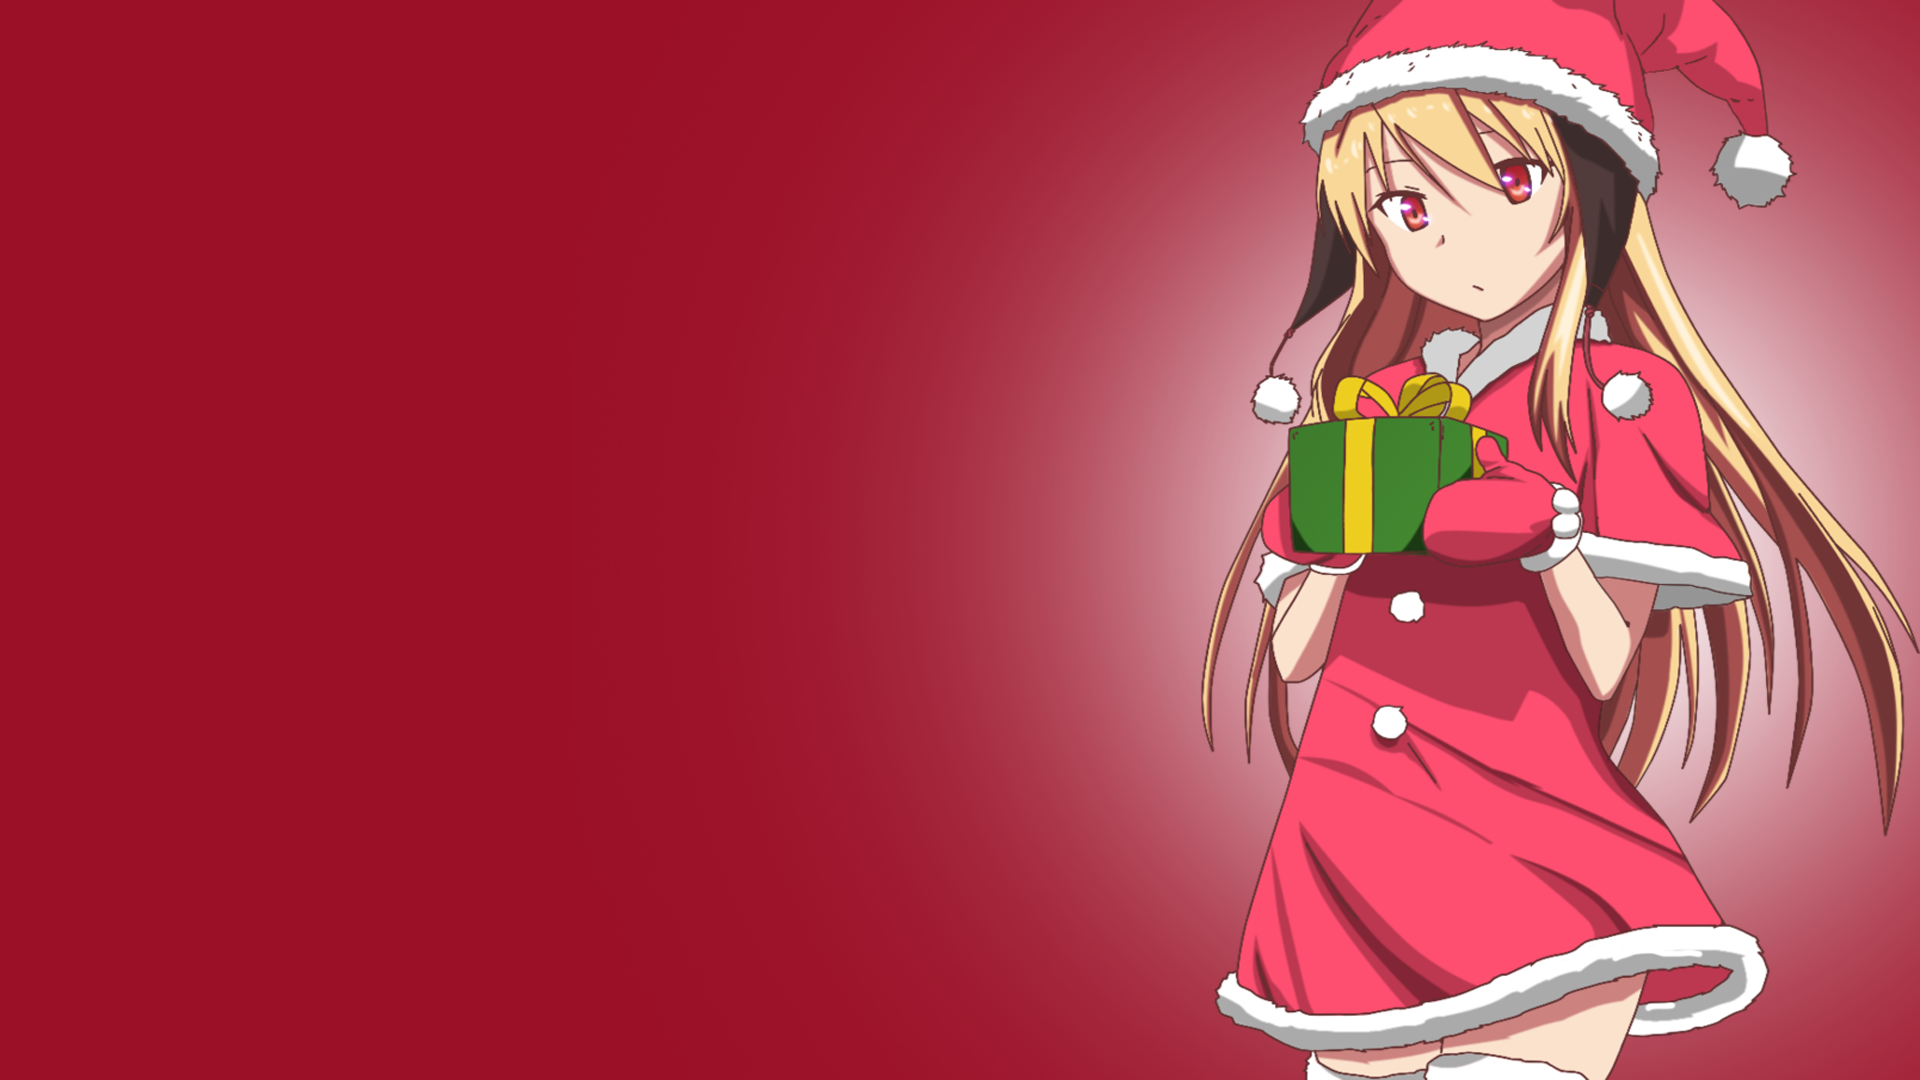 Anime 1920x1080 anime winter Sakurasou no Pet na Kanojo Shiina Mashiro Christmas holiday red background simple background Santa costume Santa hats Christmas presents long hair blonde